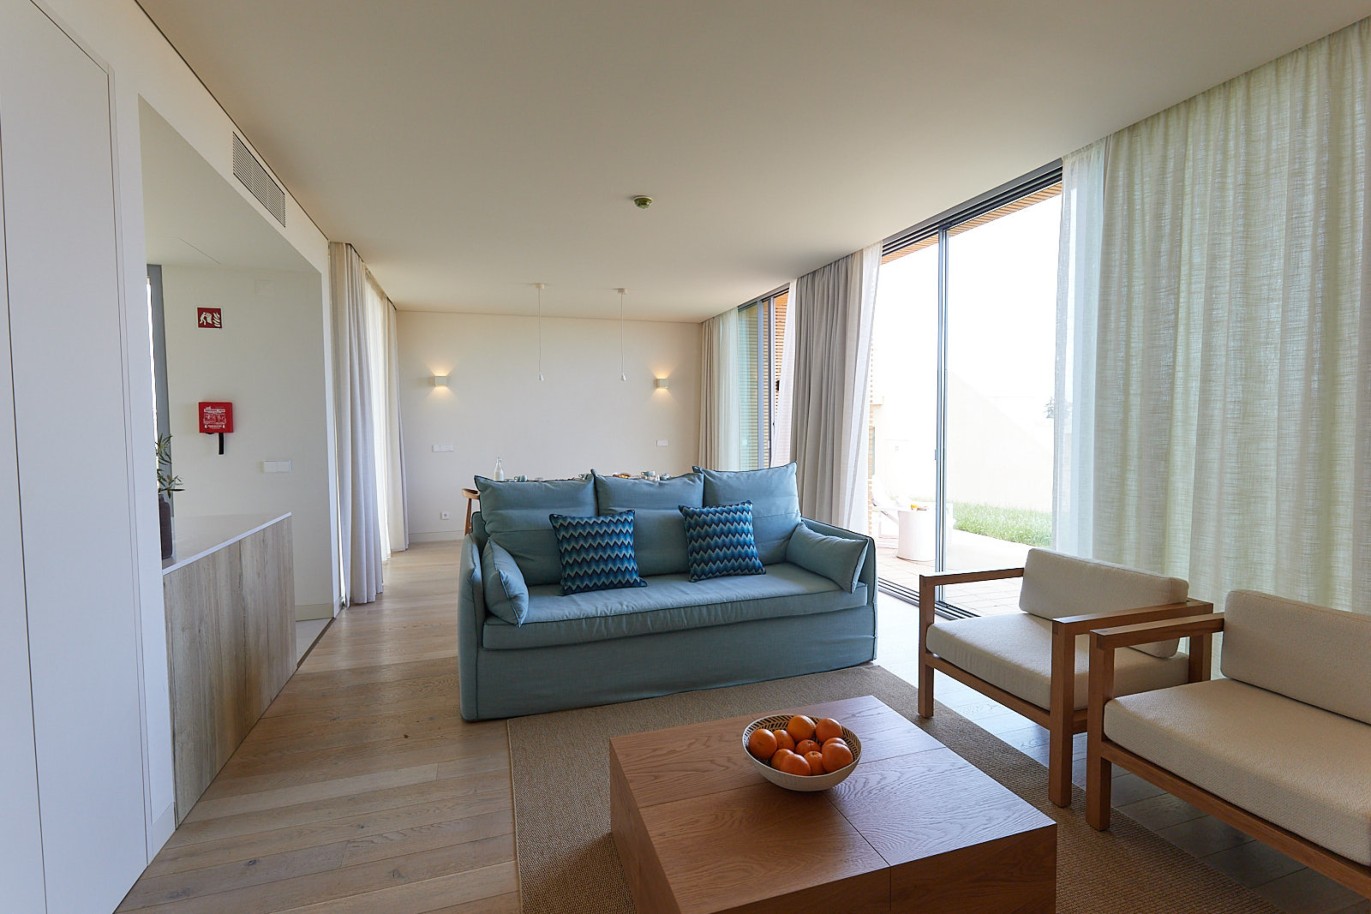 2 bedroom apartment in resort, for sale in Porches, Algarve_229235